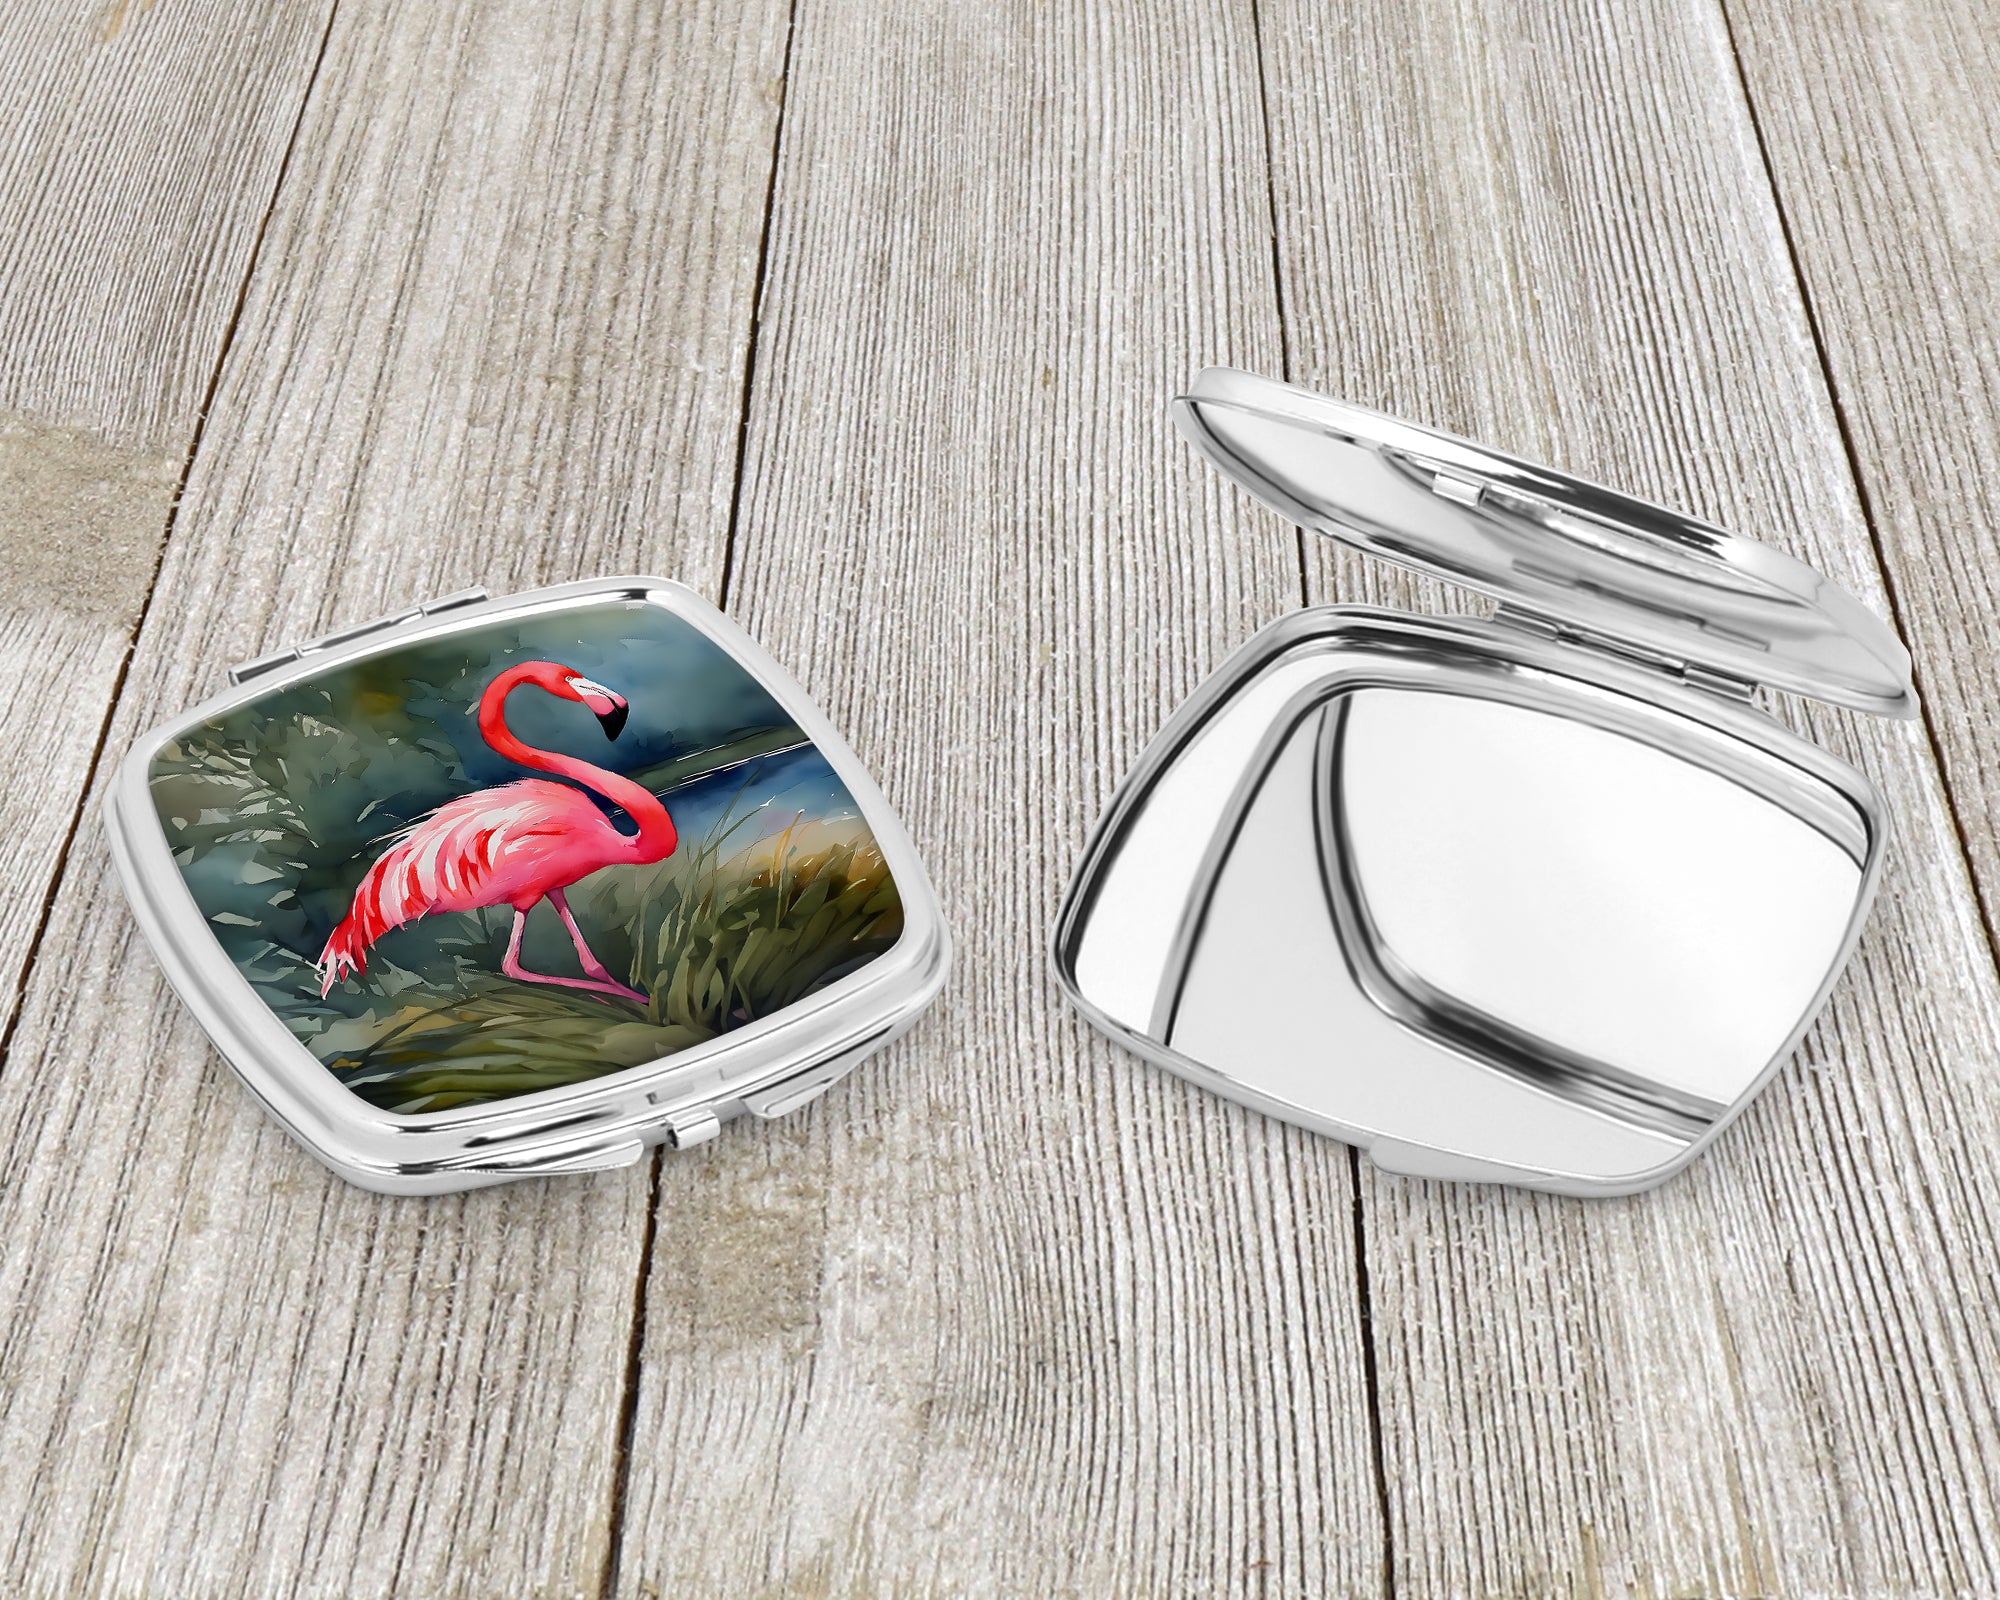 Flamingo Compact Mirror